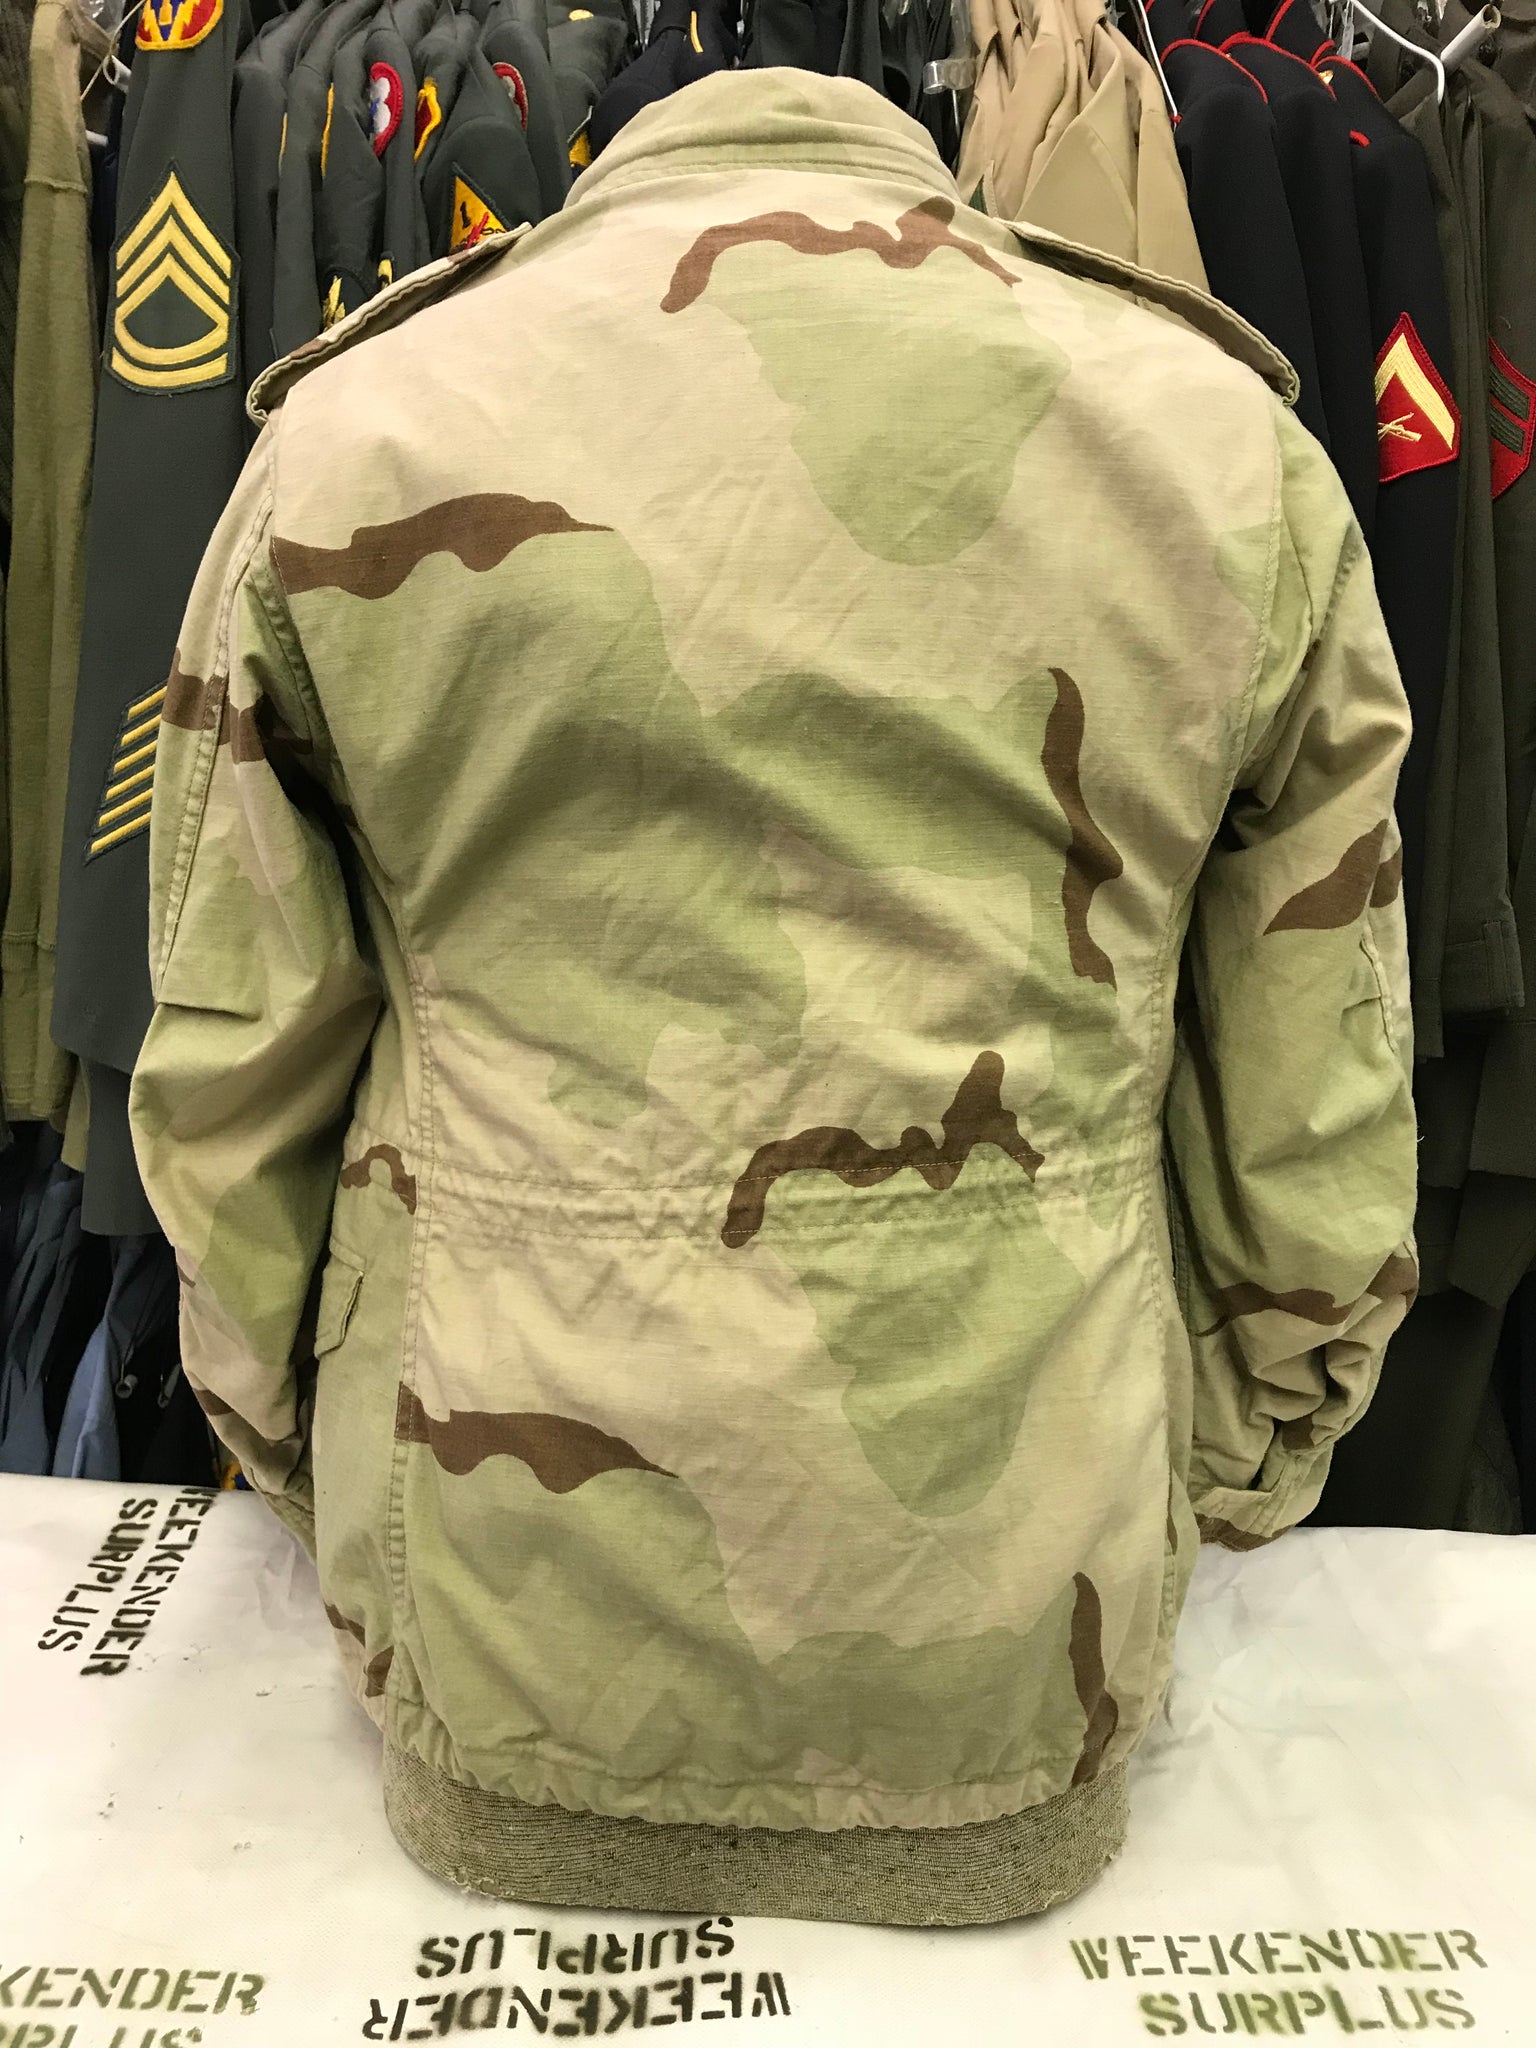 U.S. Military Original DCU Cold Weather Field Jacket